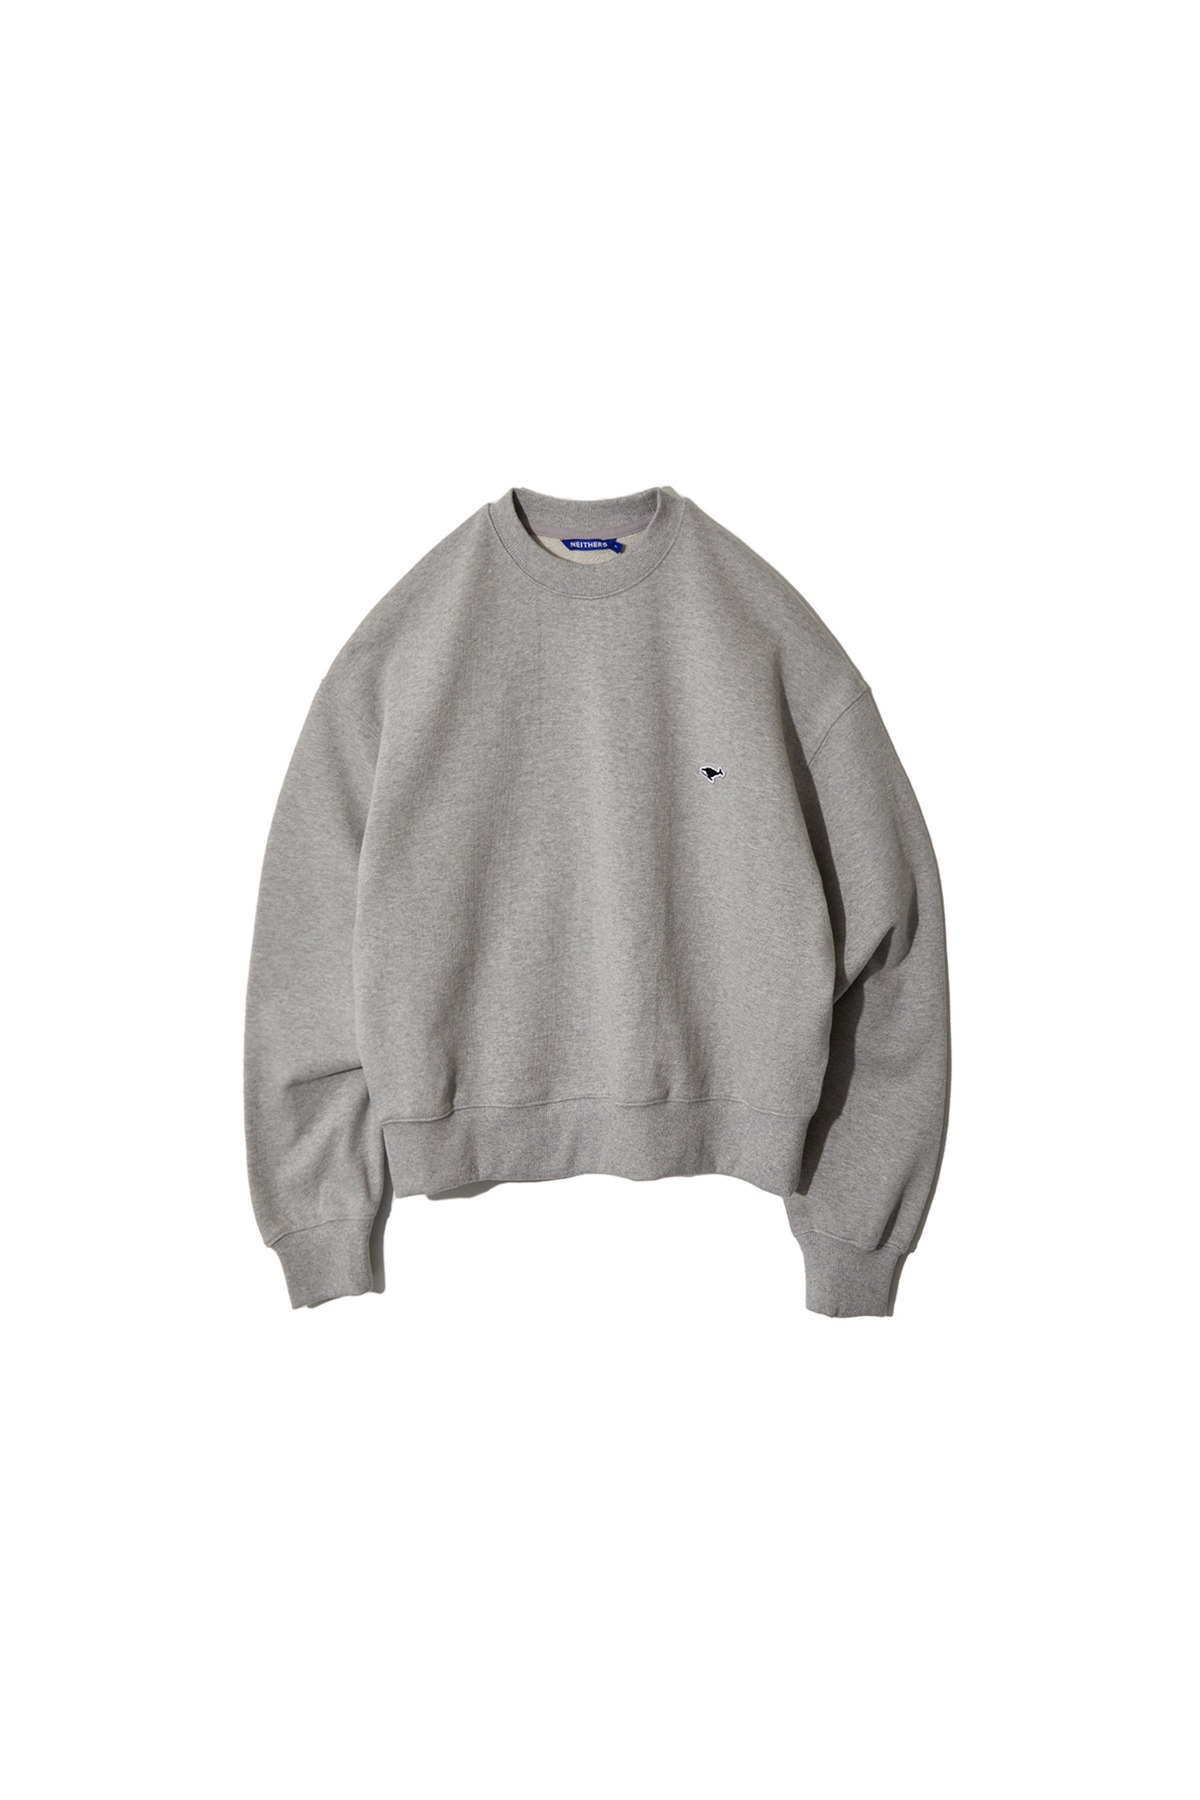 Cropped Sweatshirt For Women (Melange Grey)